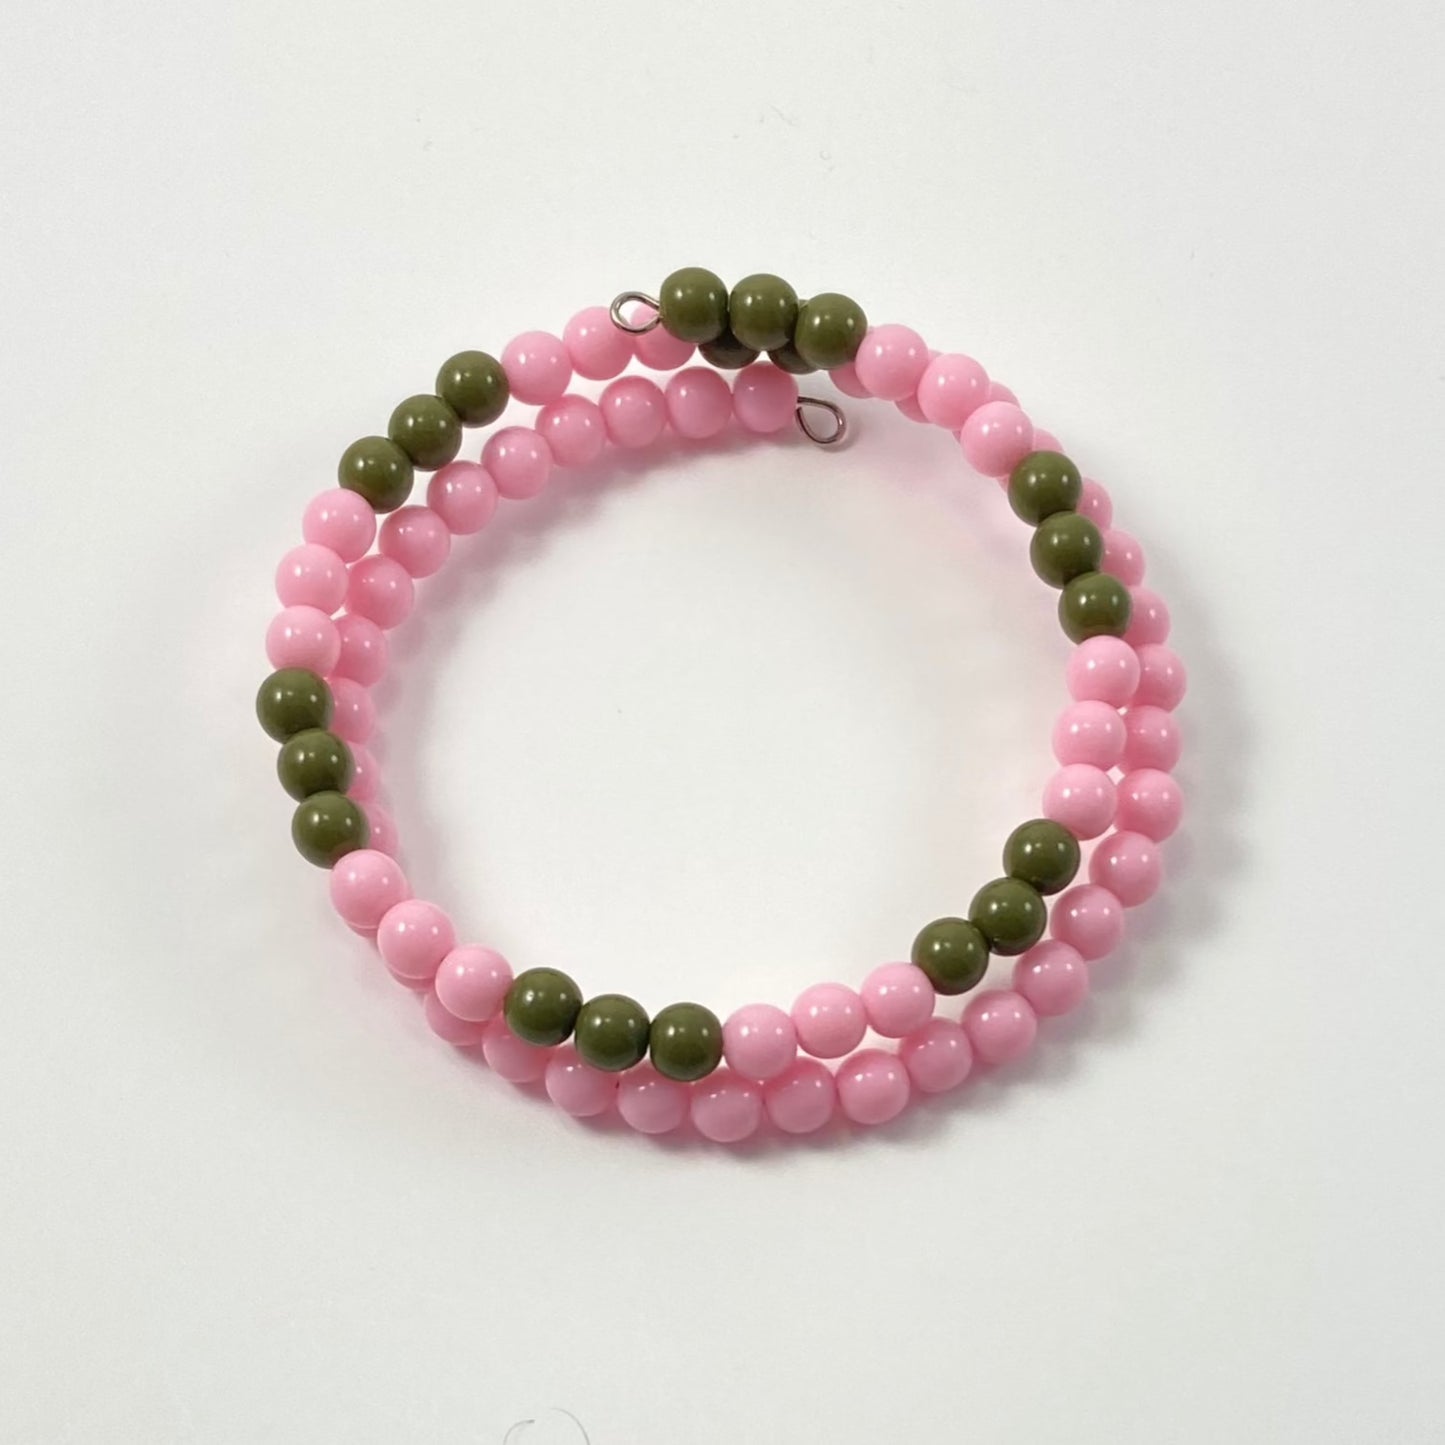 DMB-3 - Double Memory Bracelet - Pink & Green